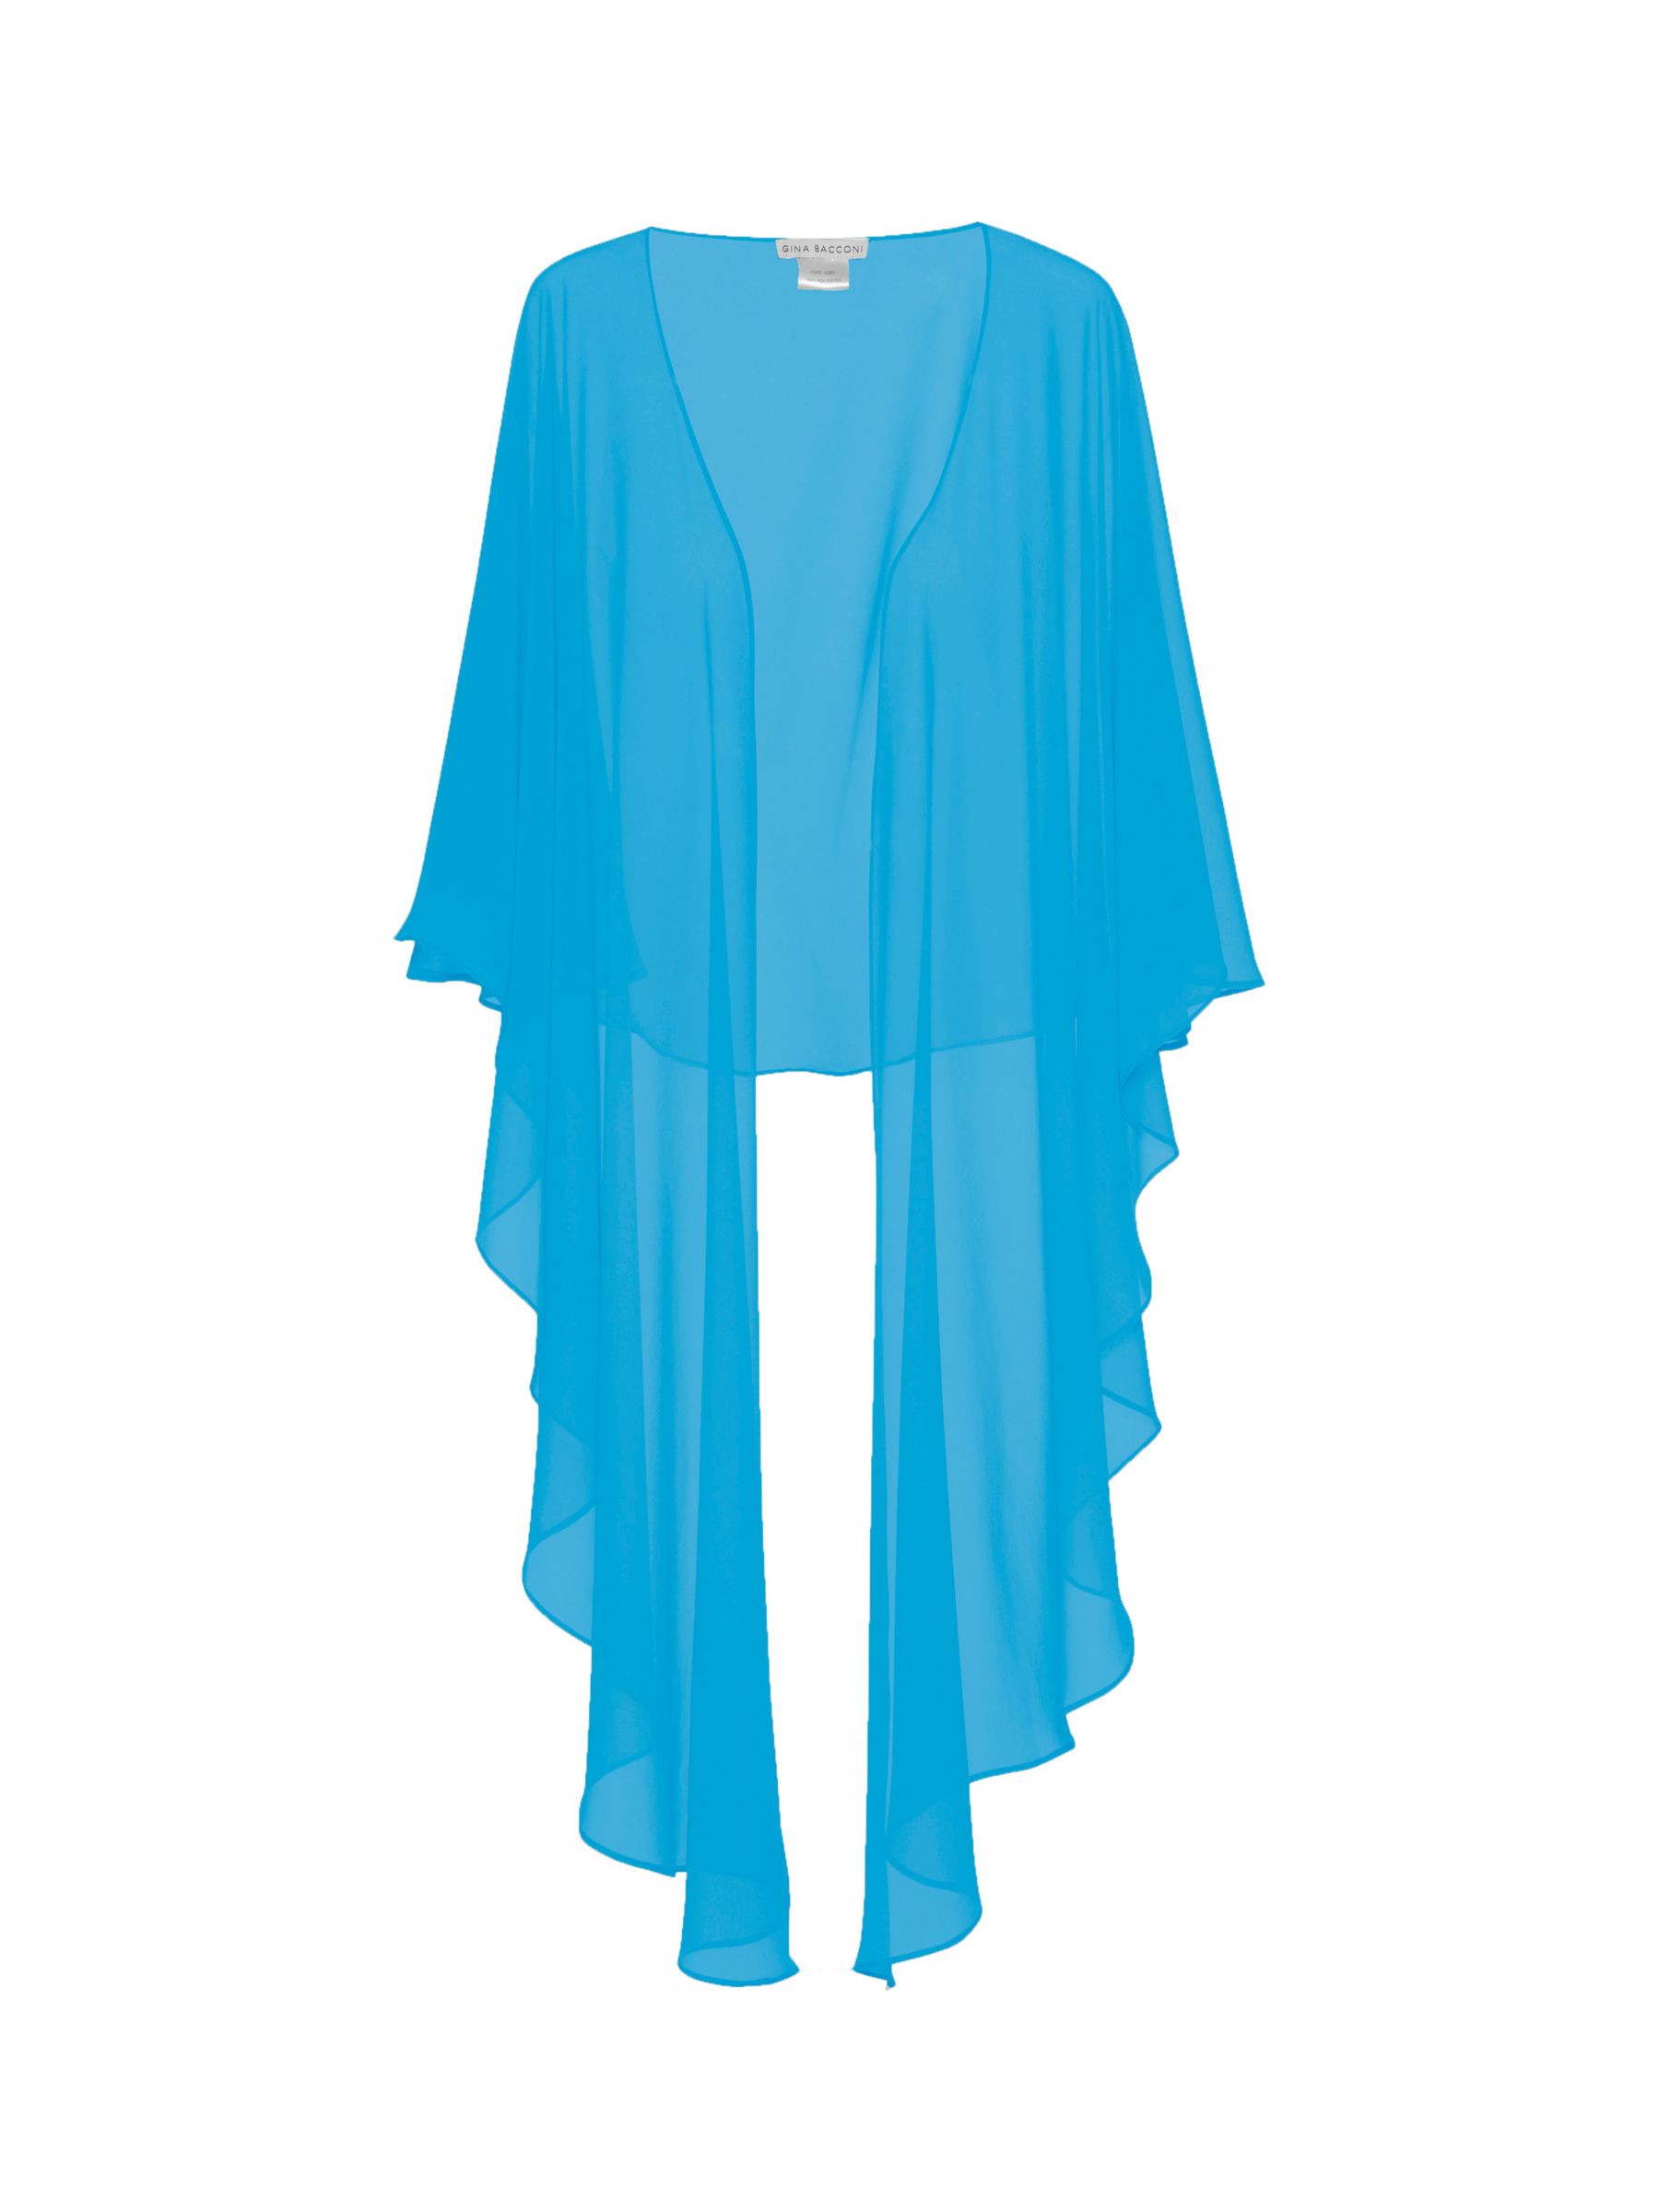 Gina Bacconi Chiffon Shawl, Summer Turquoise, One Size